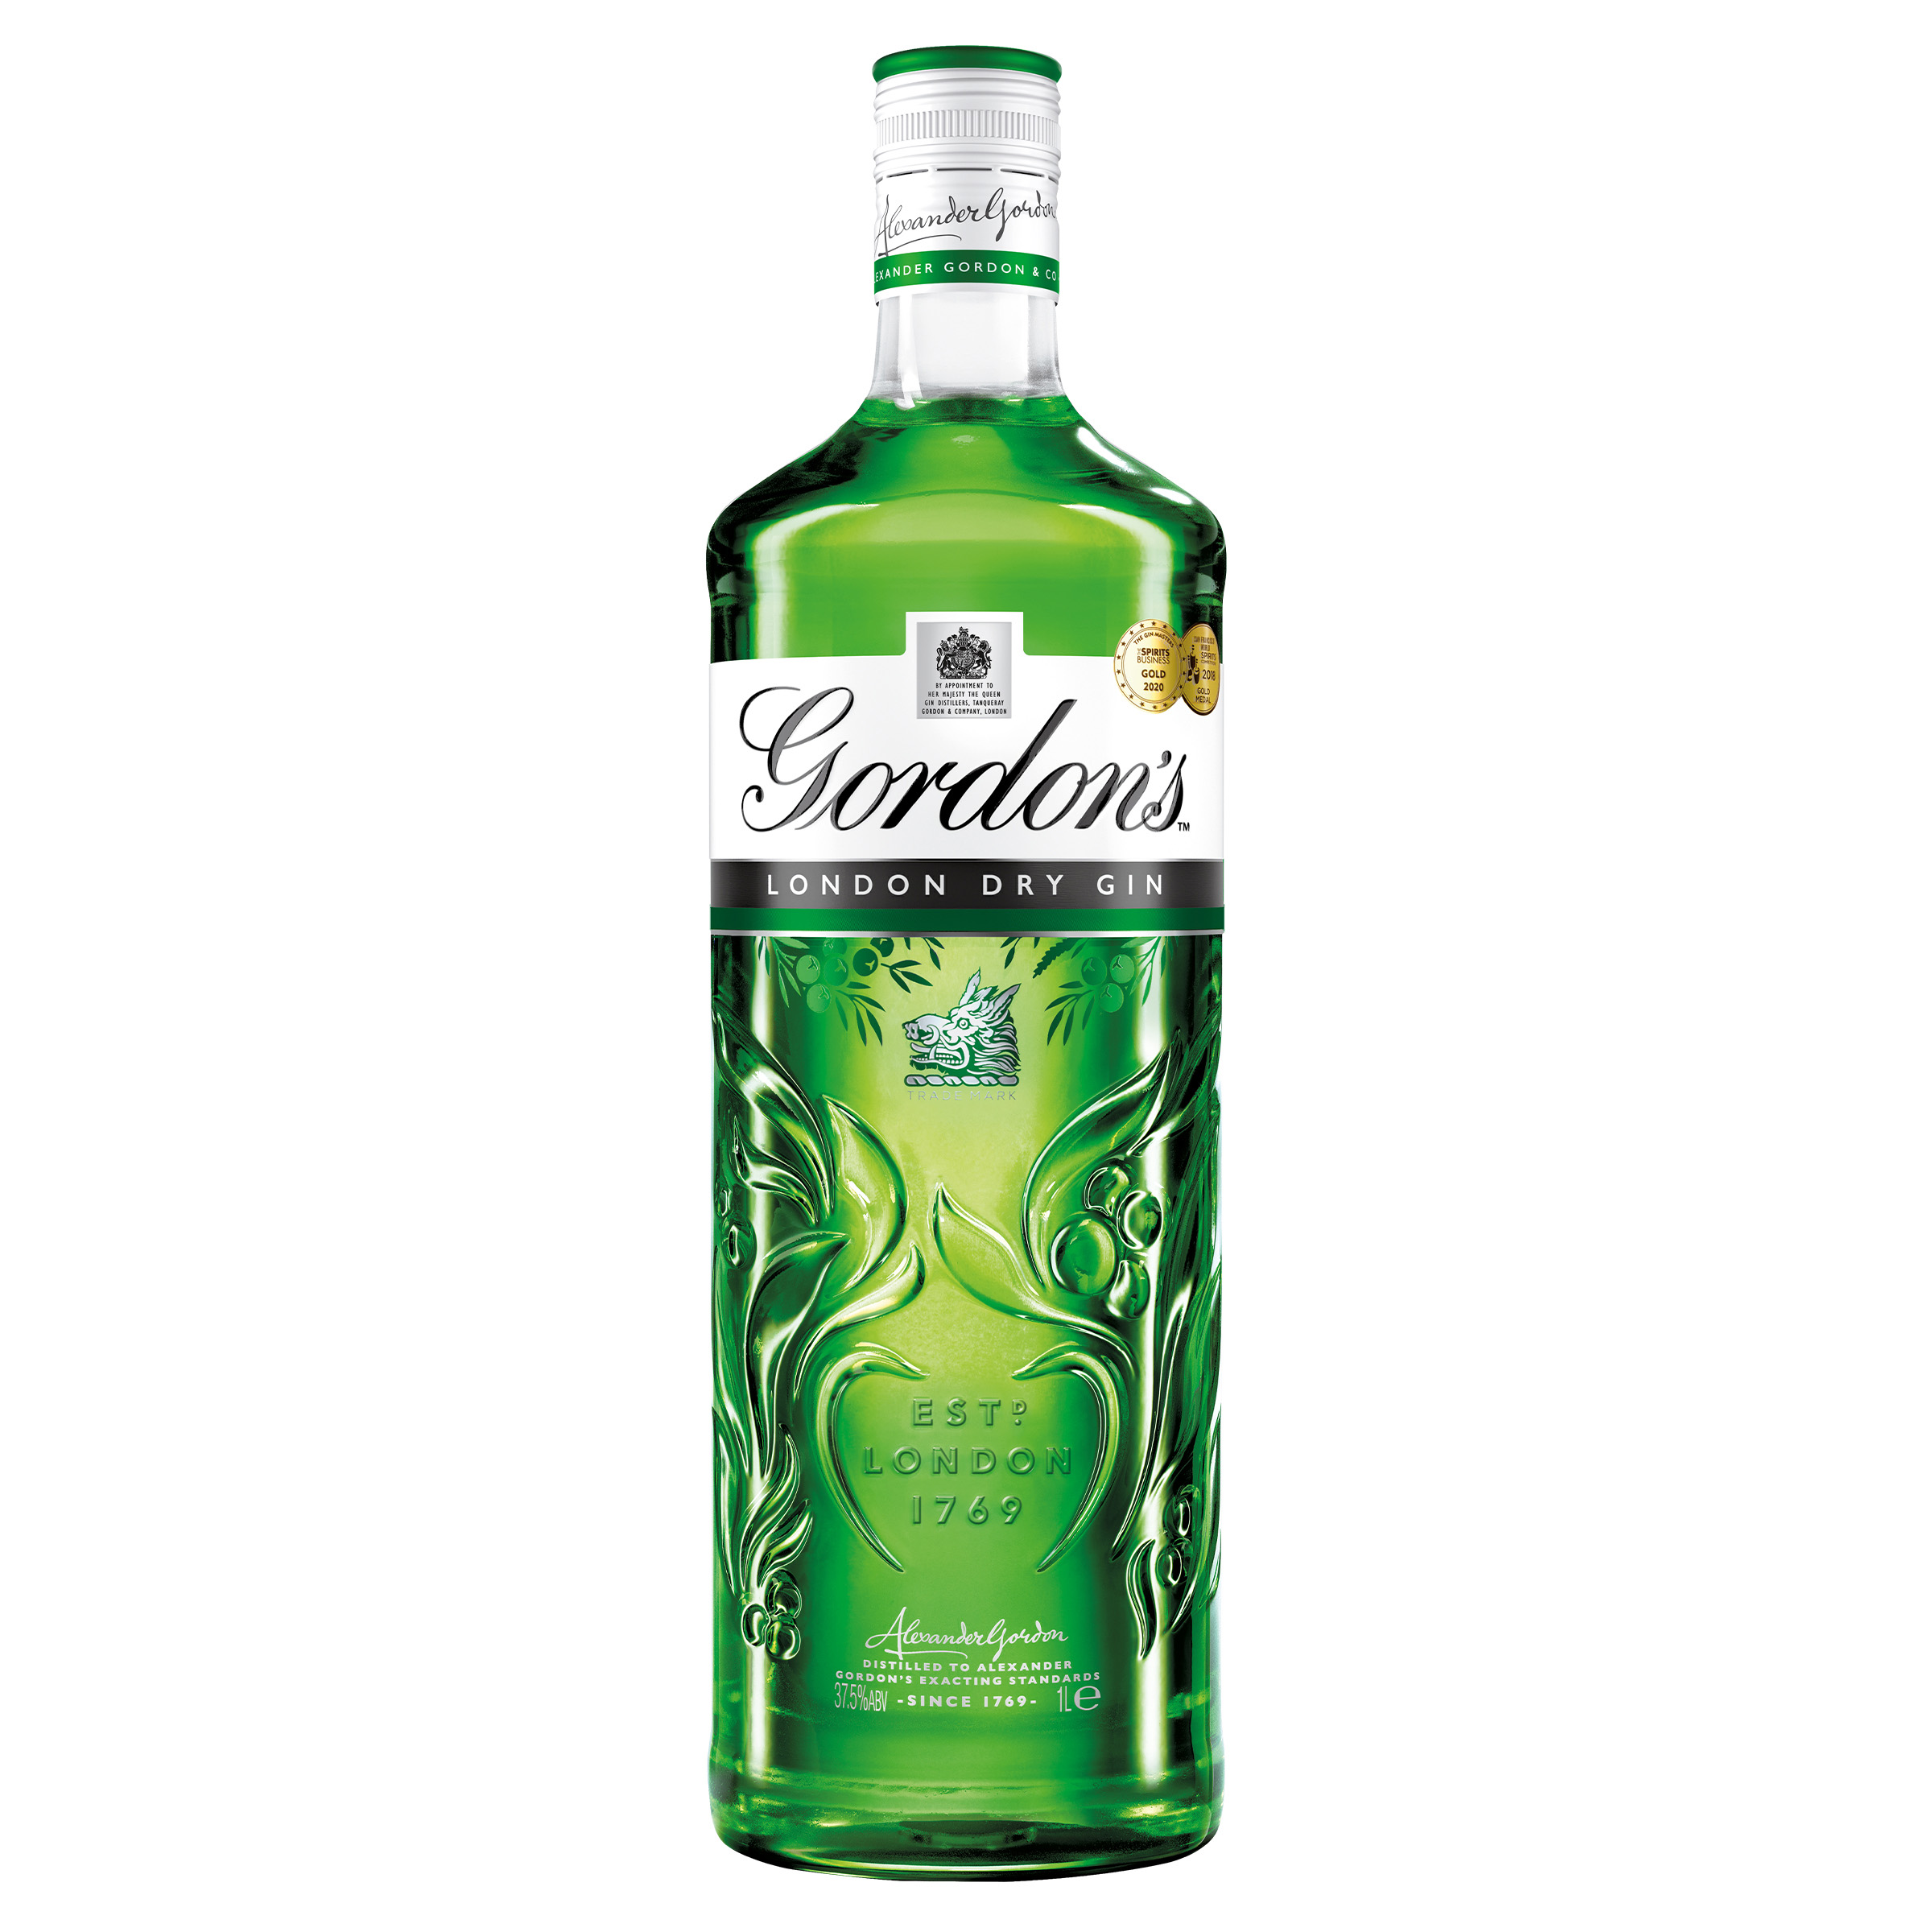 Gordon's London Dry Gin - 1 L